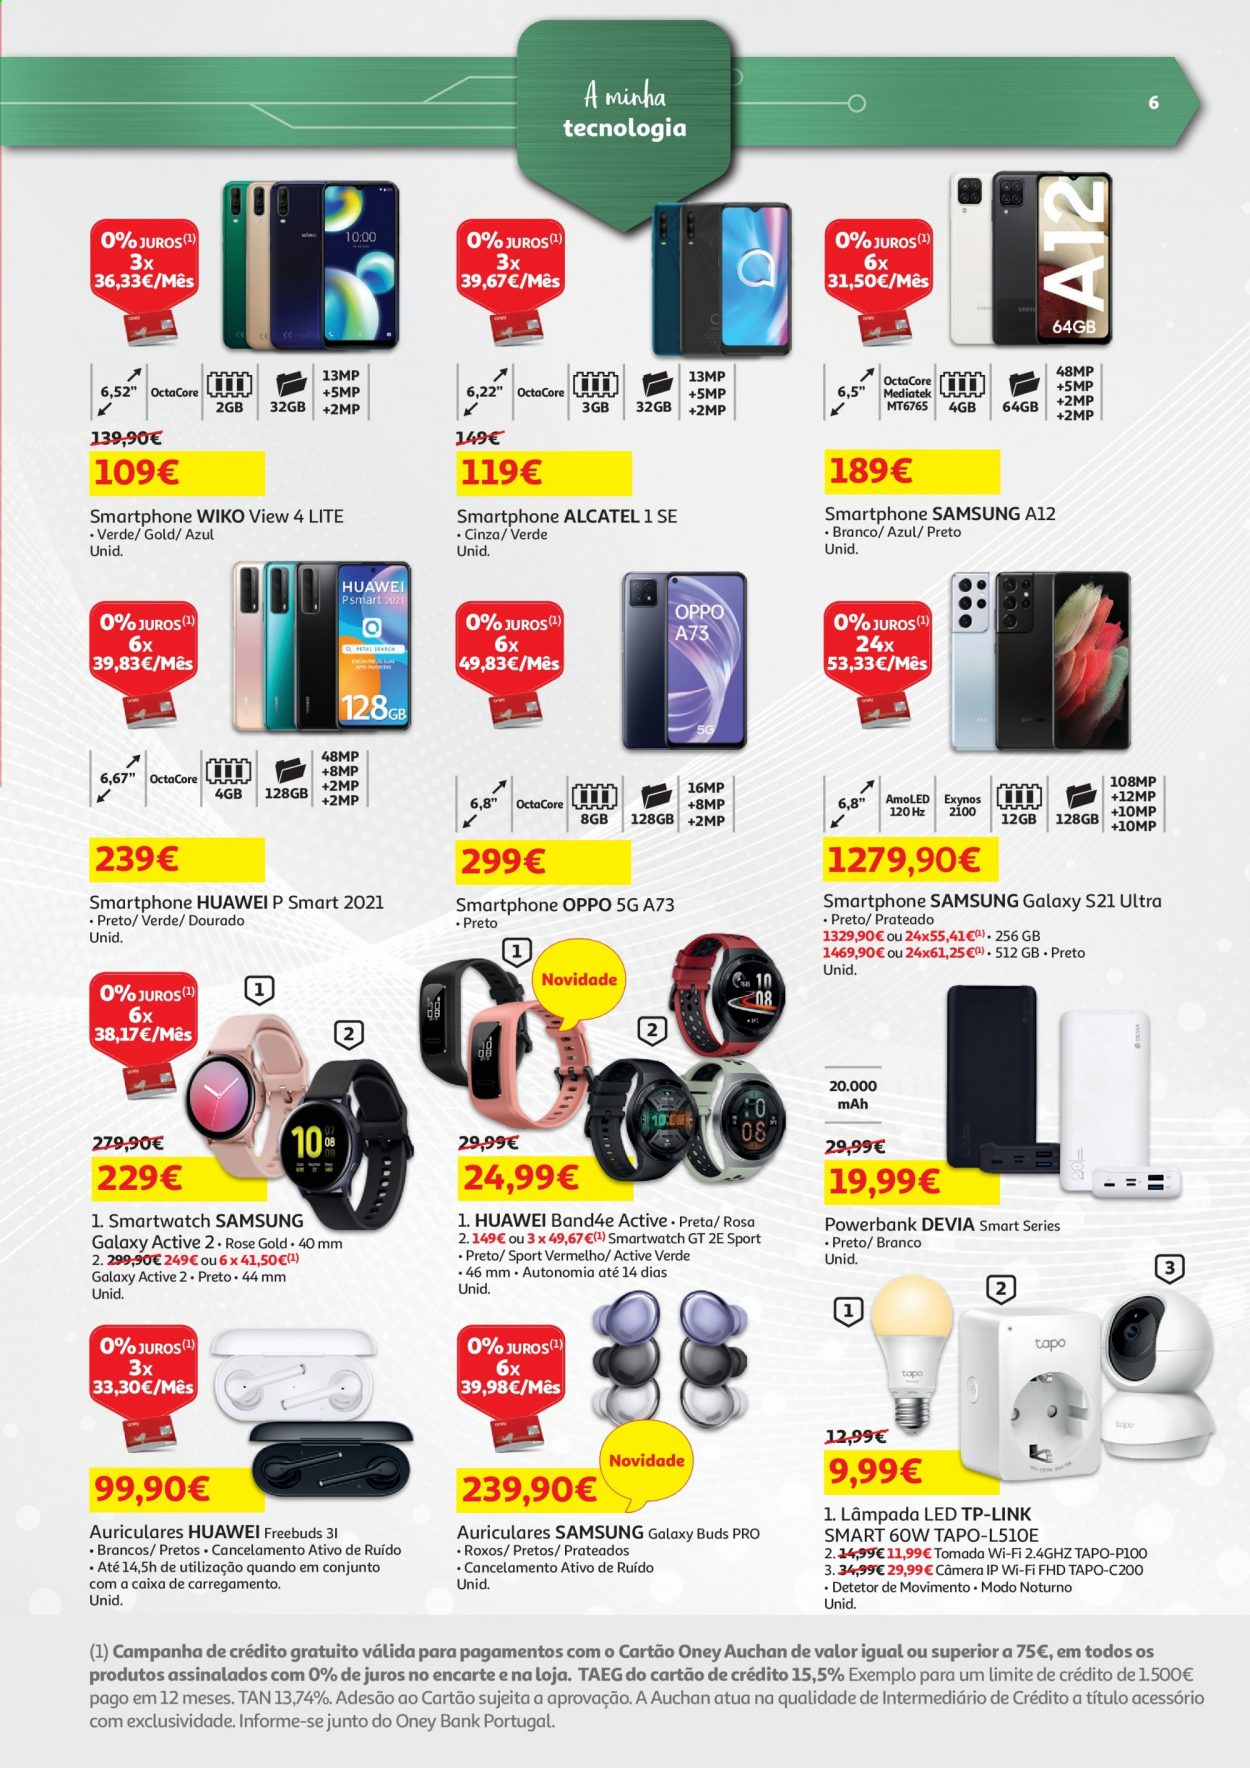 thumbnail - Folheto Auchan - 2.2.2021 - 16.2.2021 - Produtos em promoção - Samsung, Alcatel, Huawei, Samsung Galaxy, Samsung Galaxy S, smartphone, powerbank, lâmpada. Página 31.